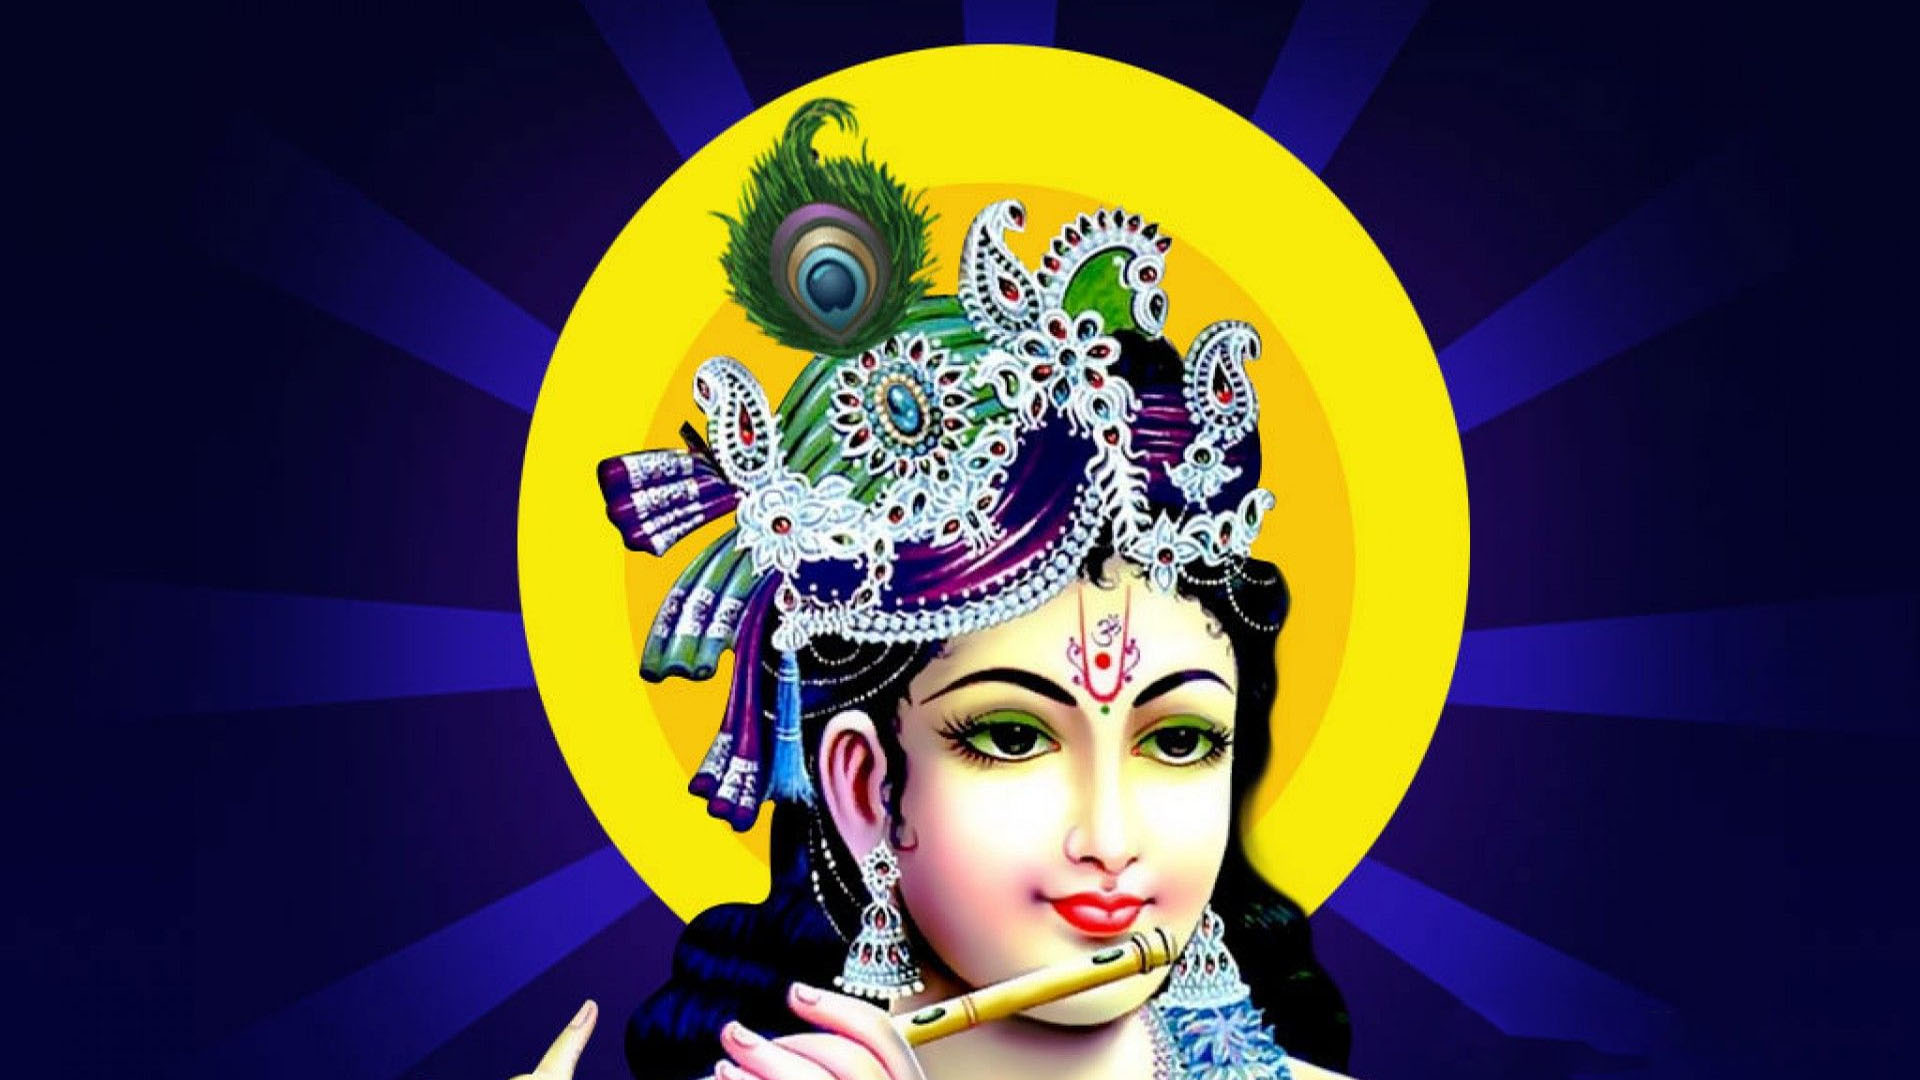 Lord Krishna Hd Wallpapers 1080p Free Download | Hindu Gods and Goddesses